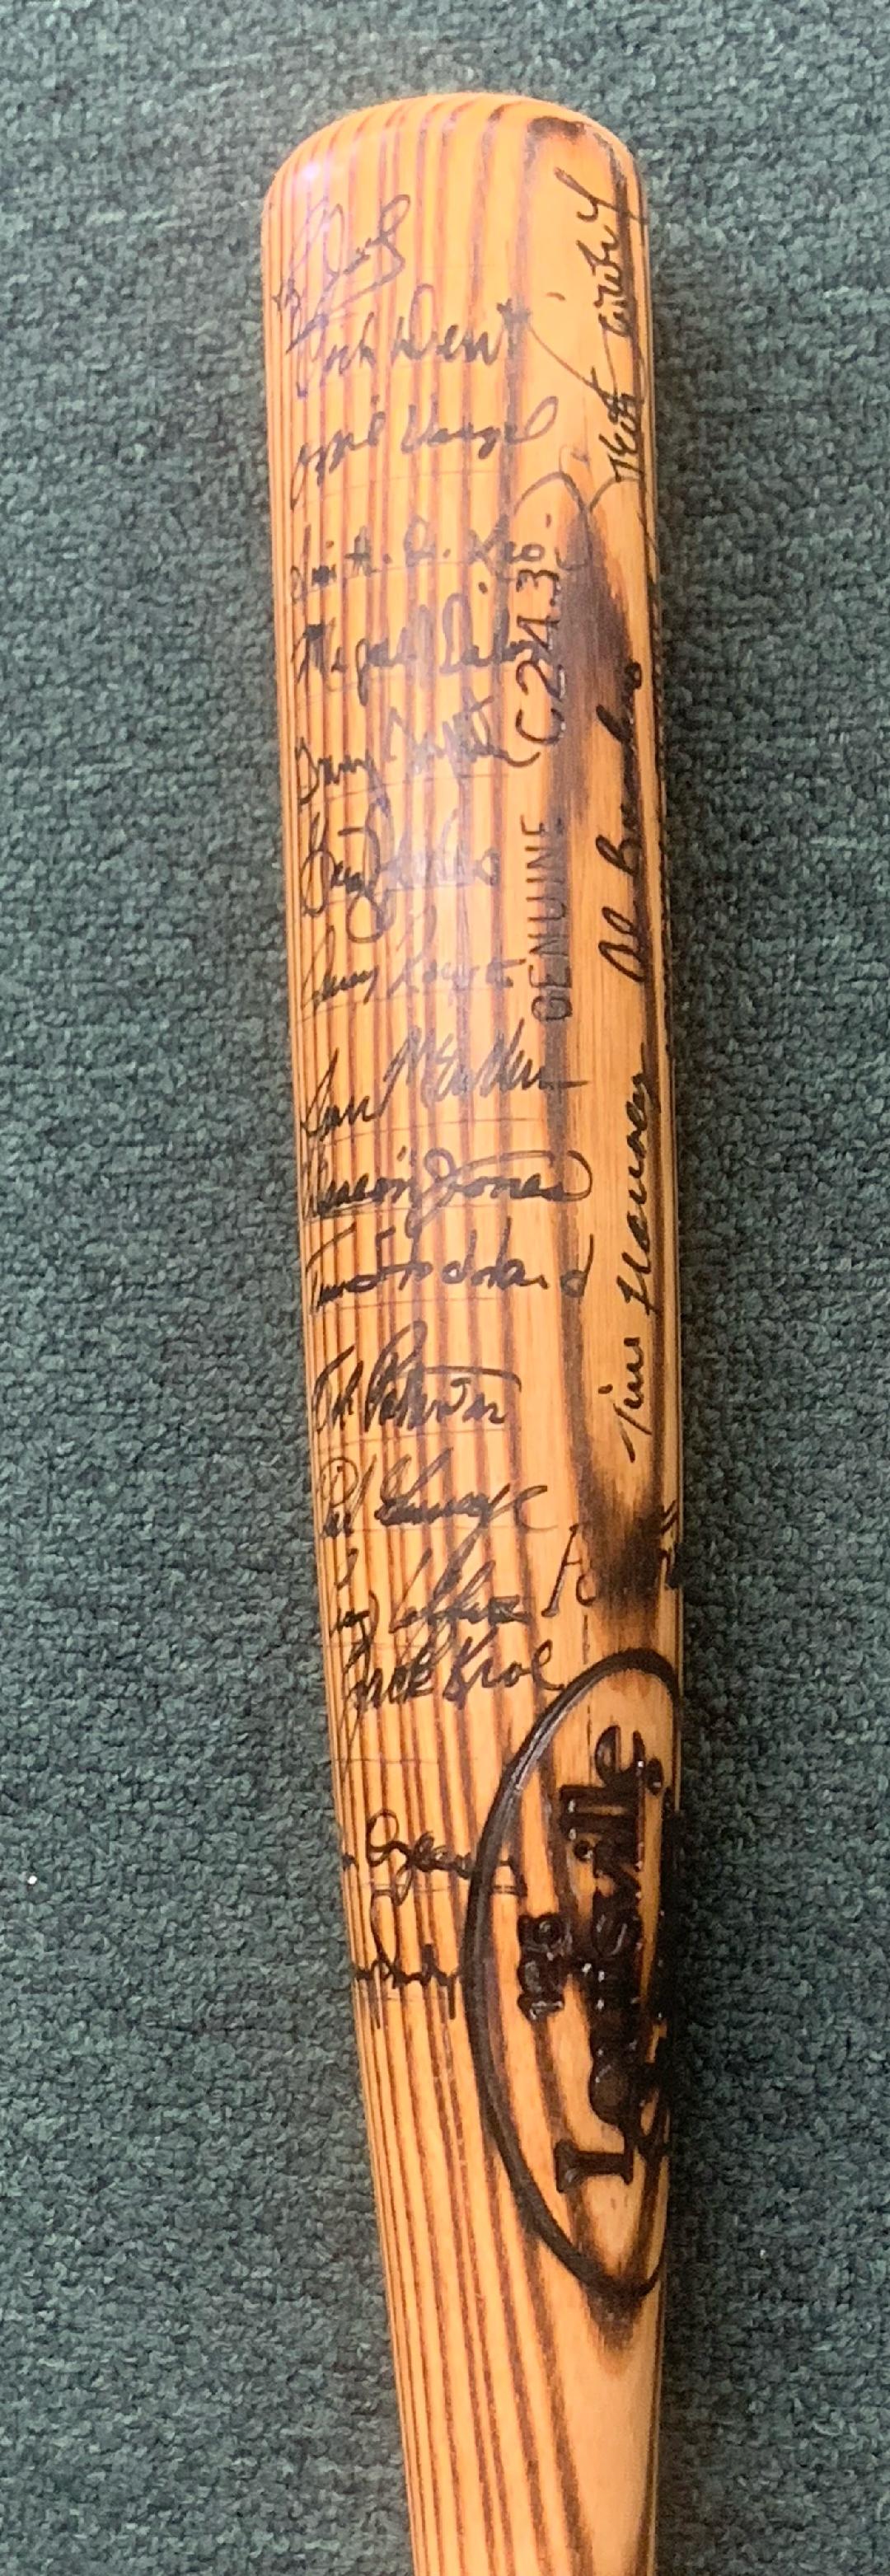 1985 San Diego Padres Team signed Al Bumbry game model bat